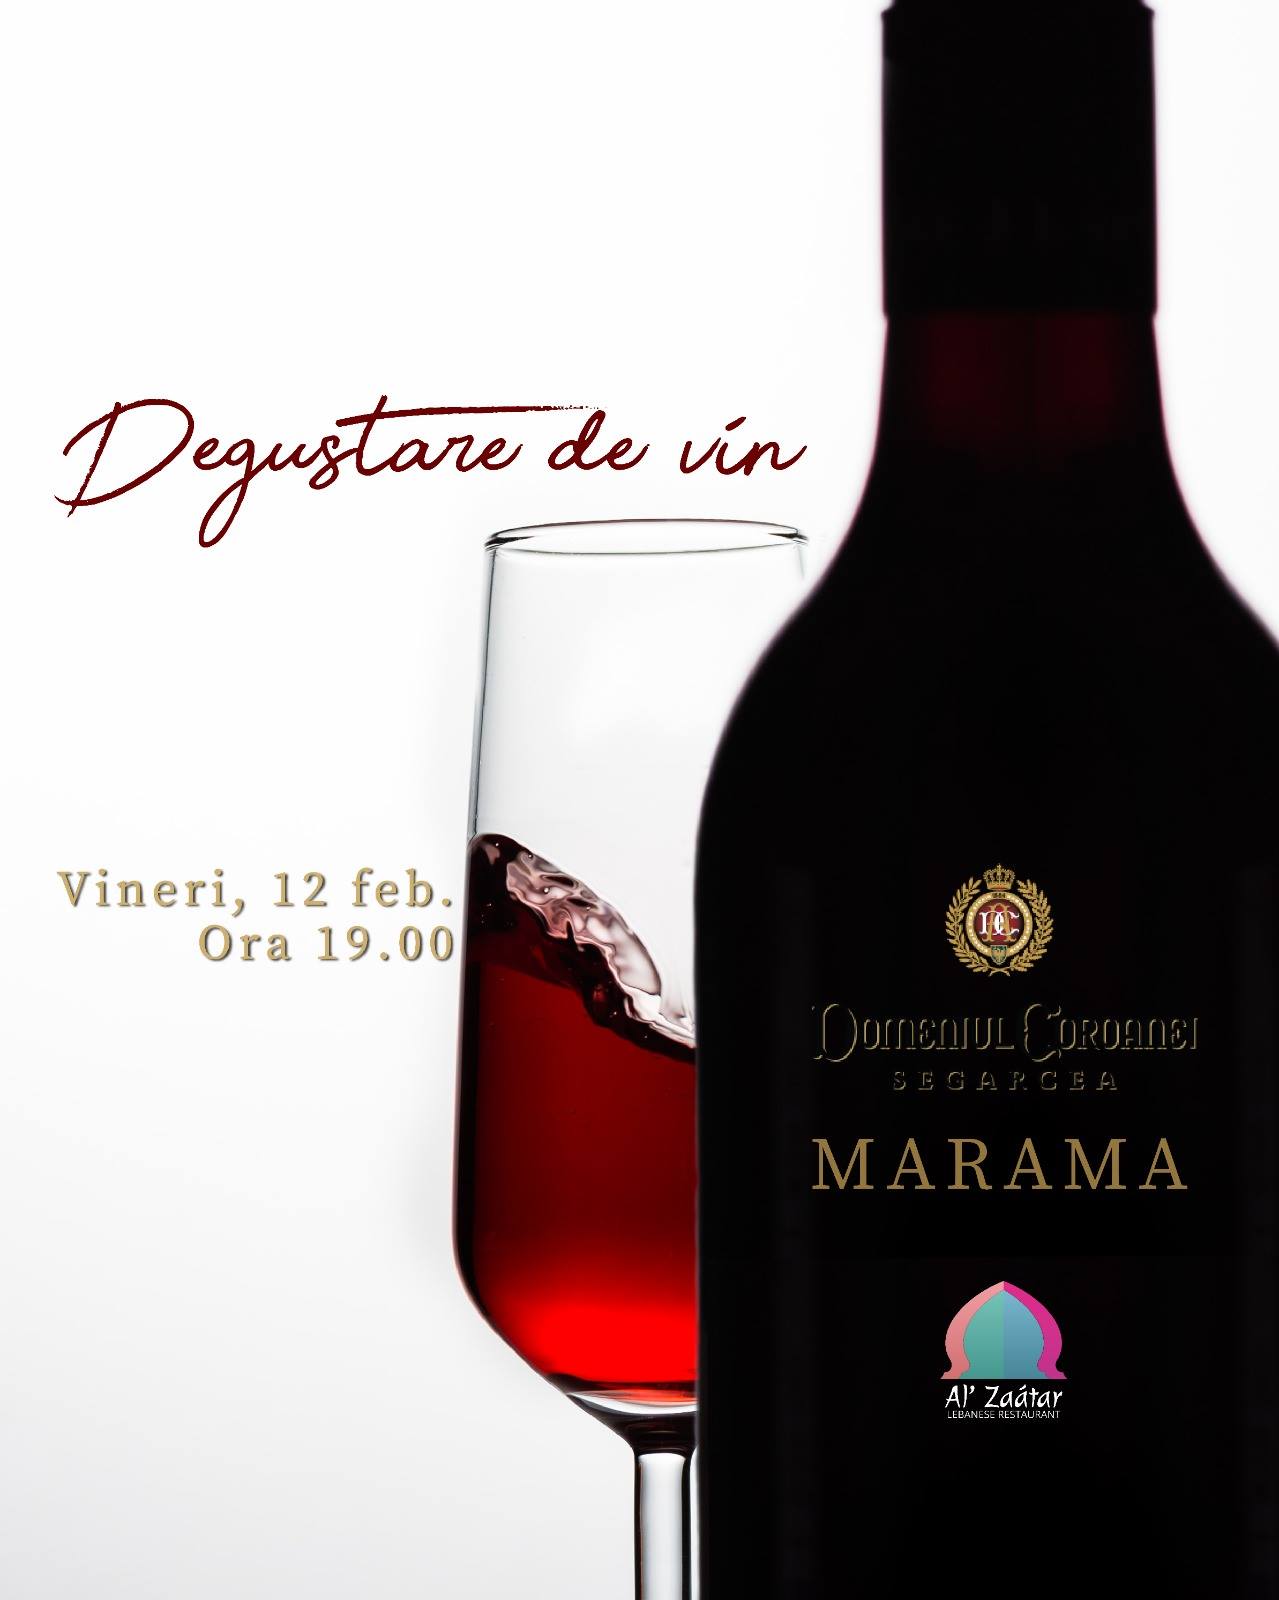 Degustare de vinuri Marama, Domeniul Coroanei Segarcea